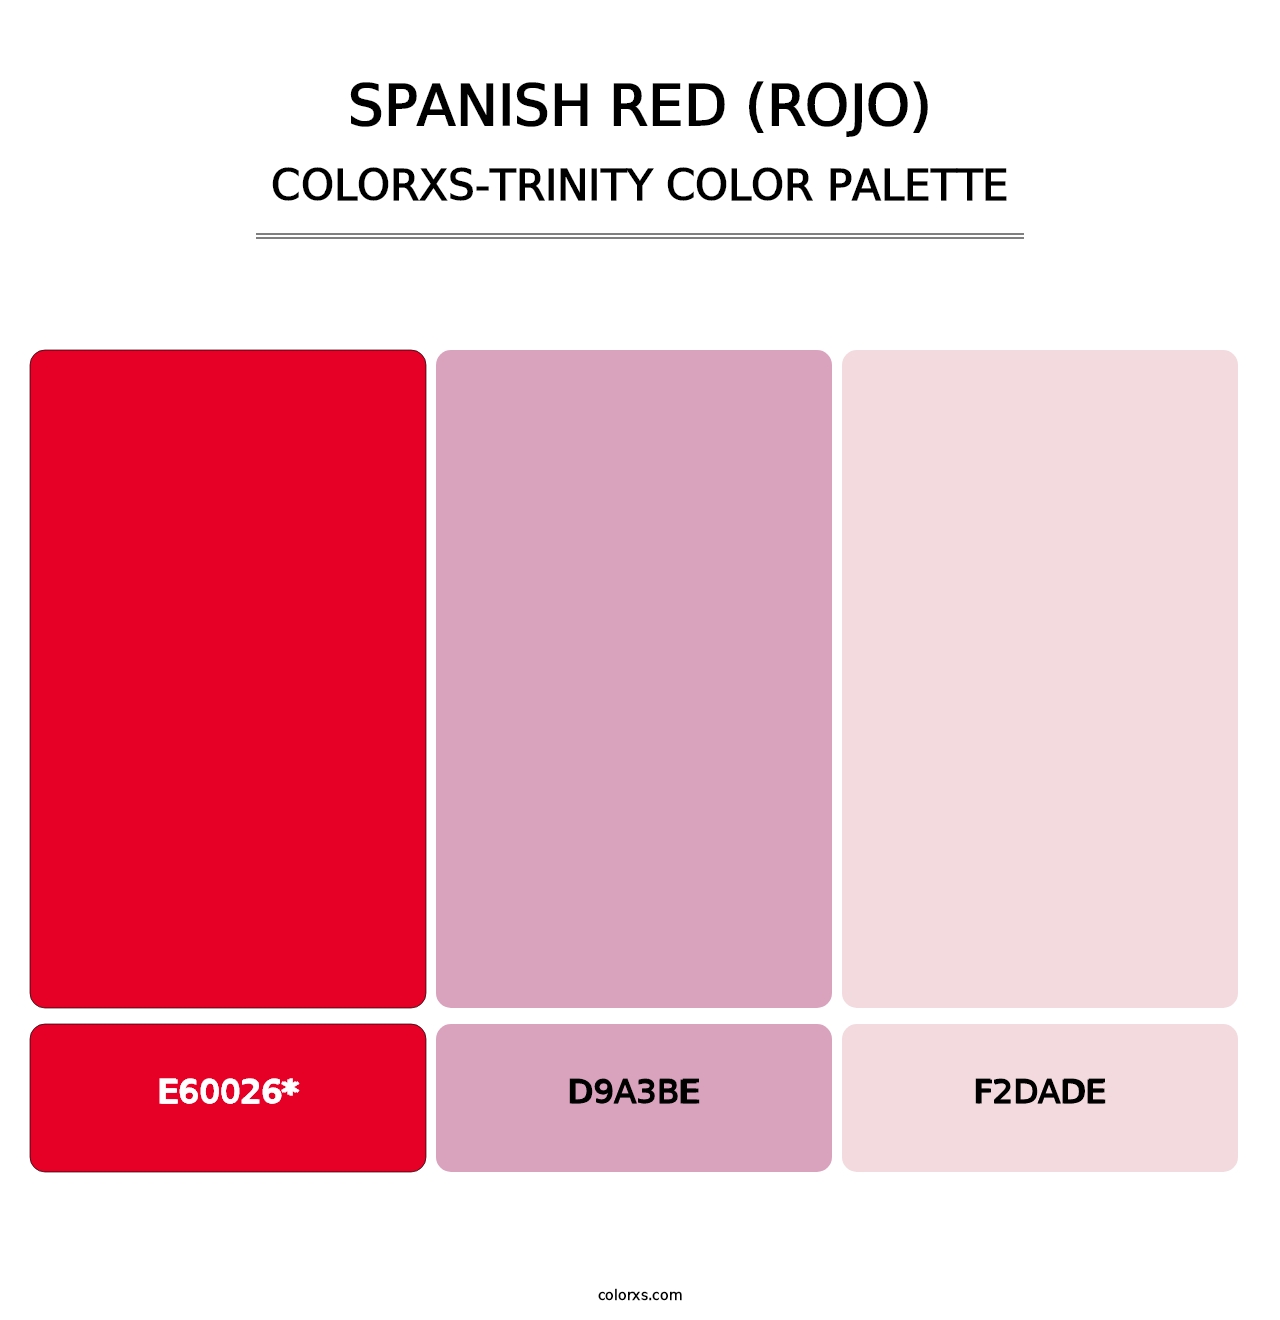 Spanish Red (Rojo) - Colorxs Trinity Palette